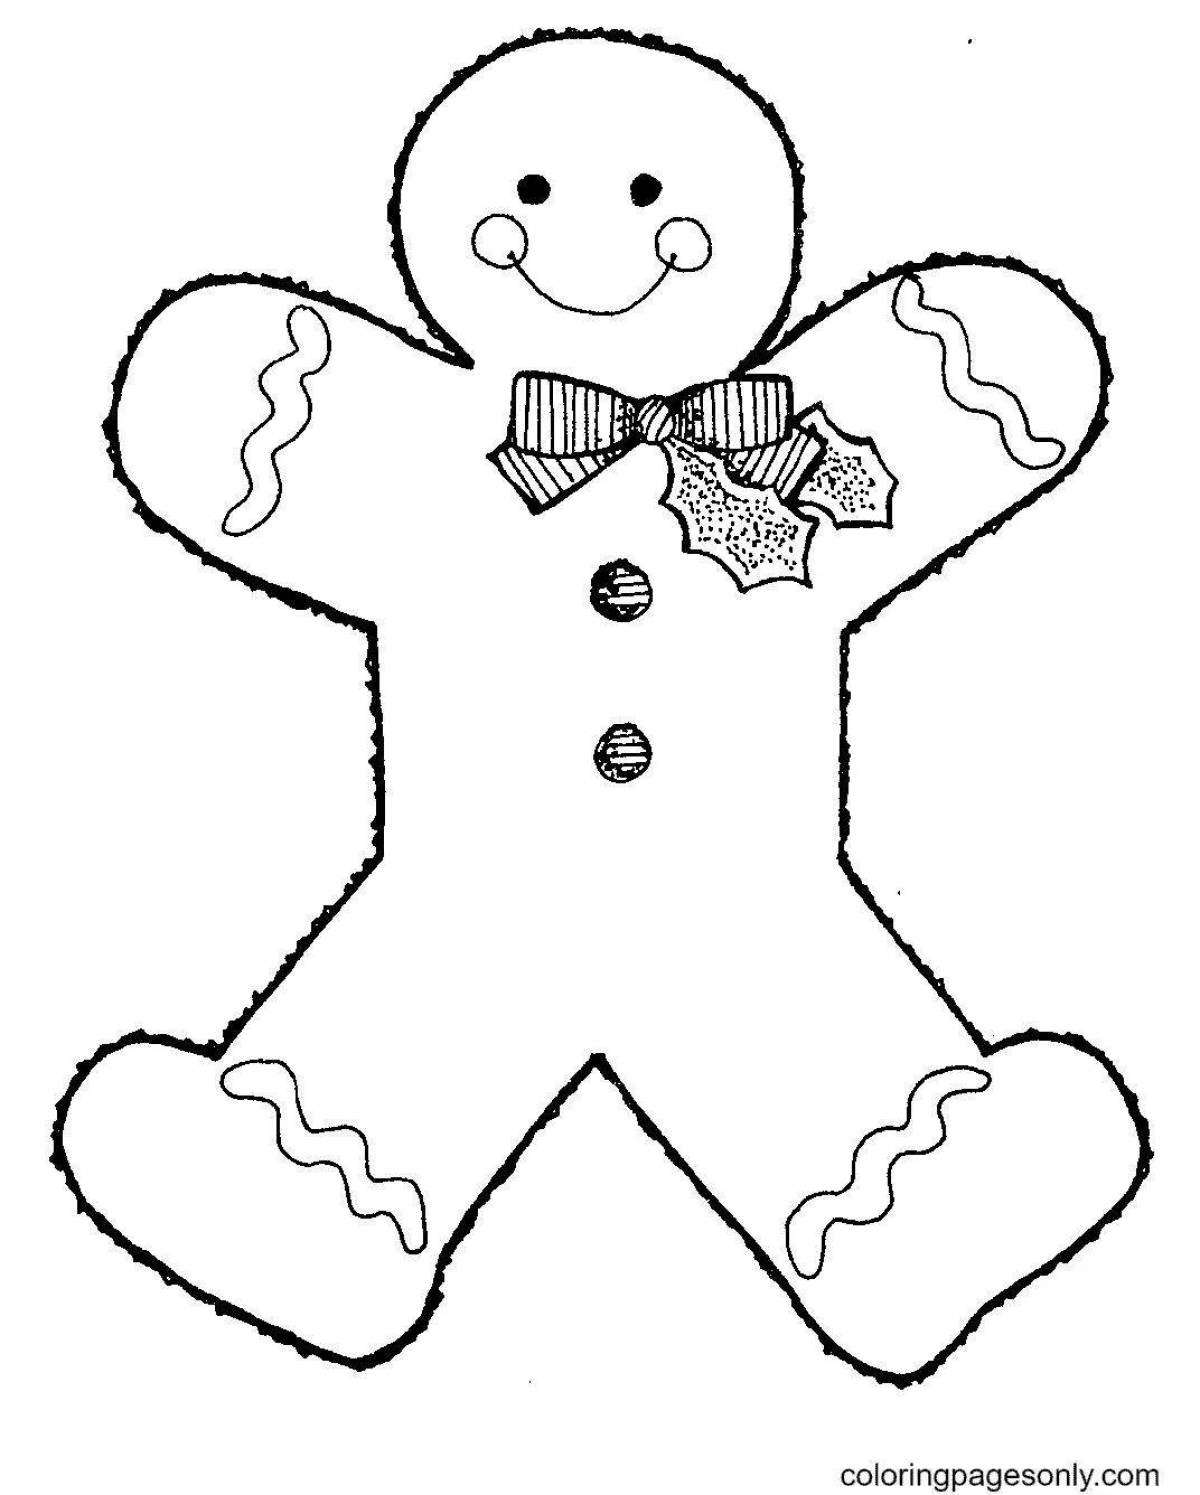 Coloring book bright gingerbread man